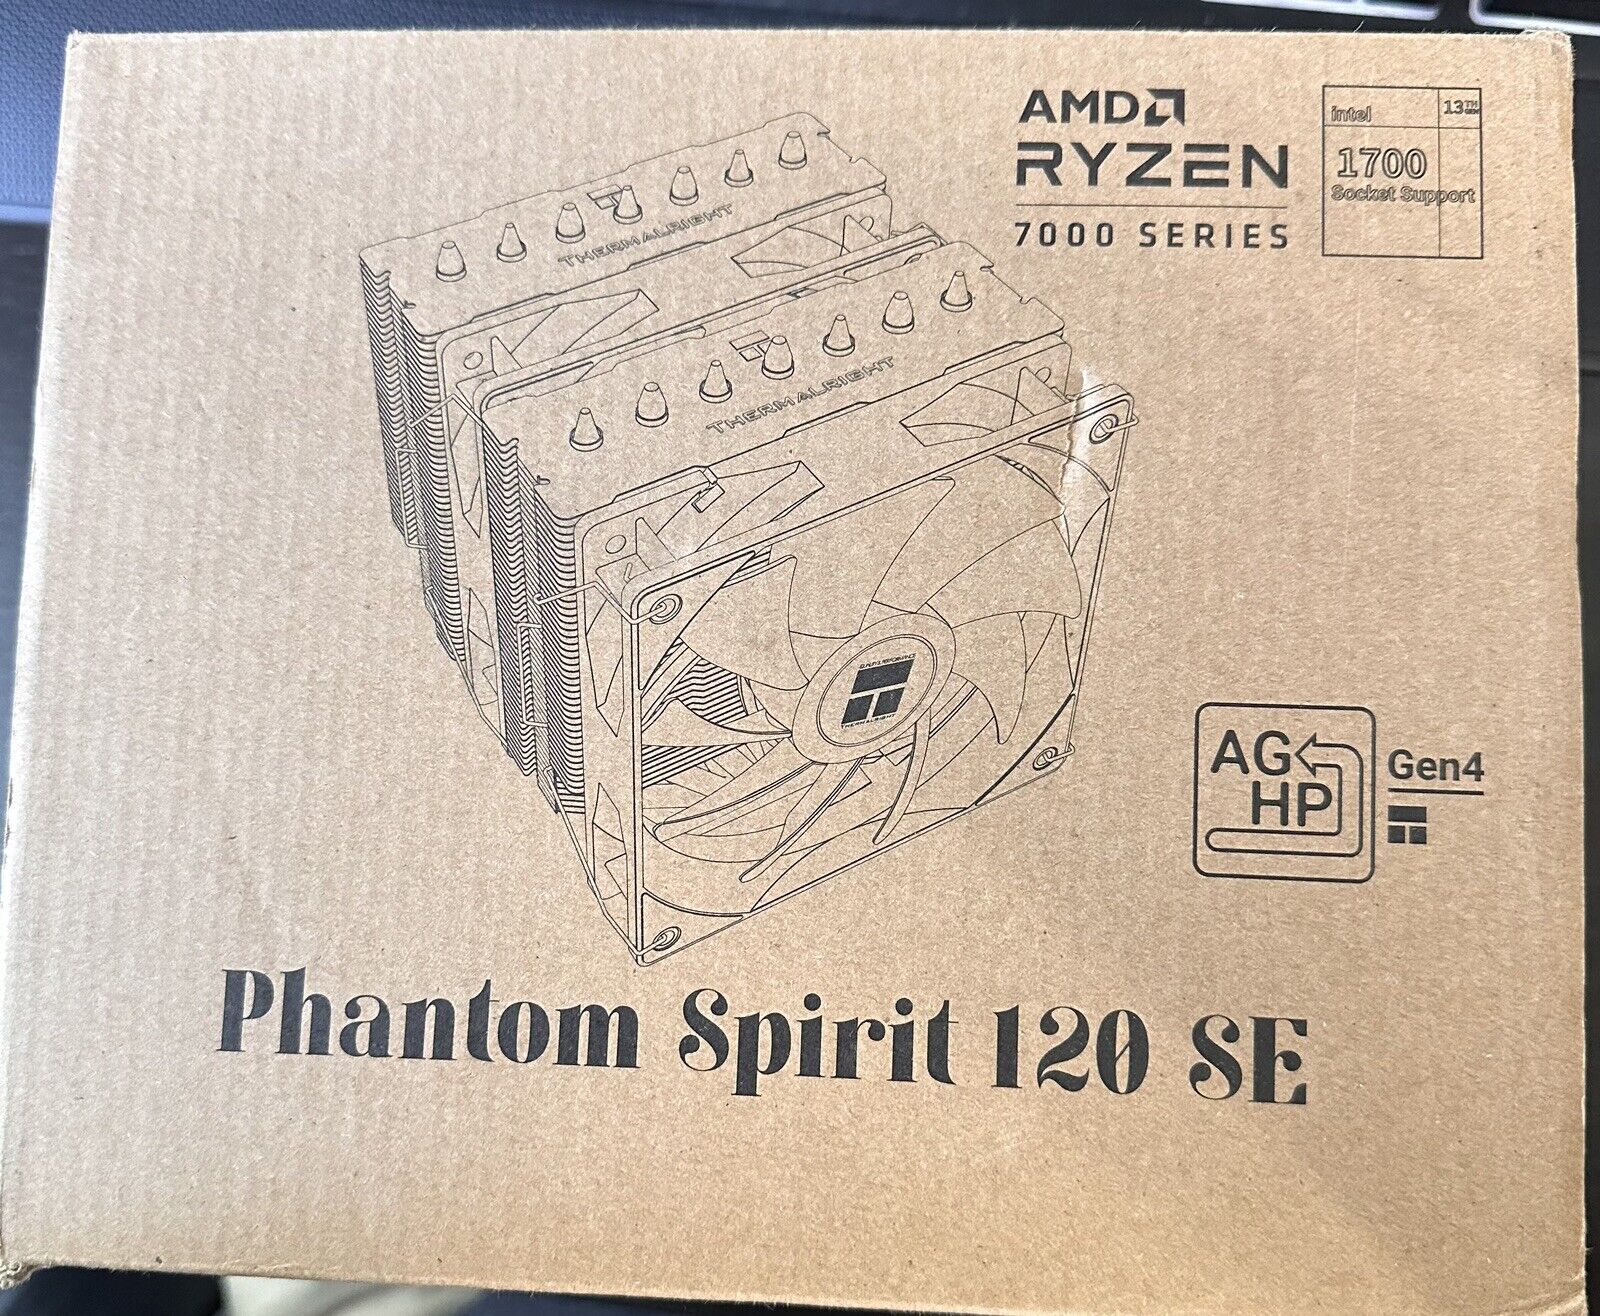 Thermalright Phantom Spirit 120 SE AMD Ryzen 7000 Series - Open Box